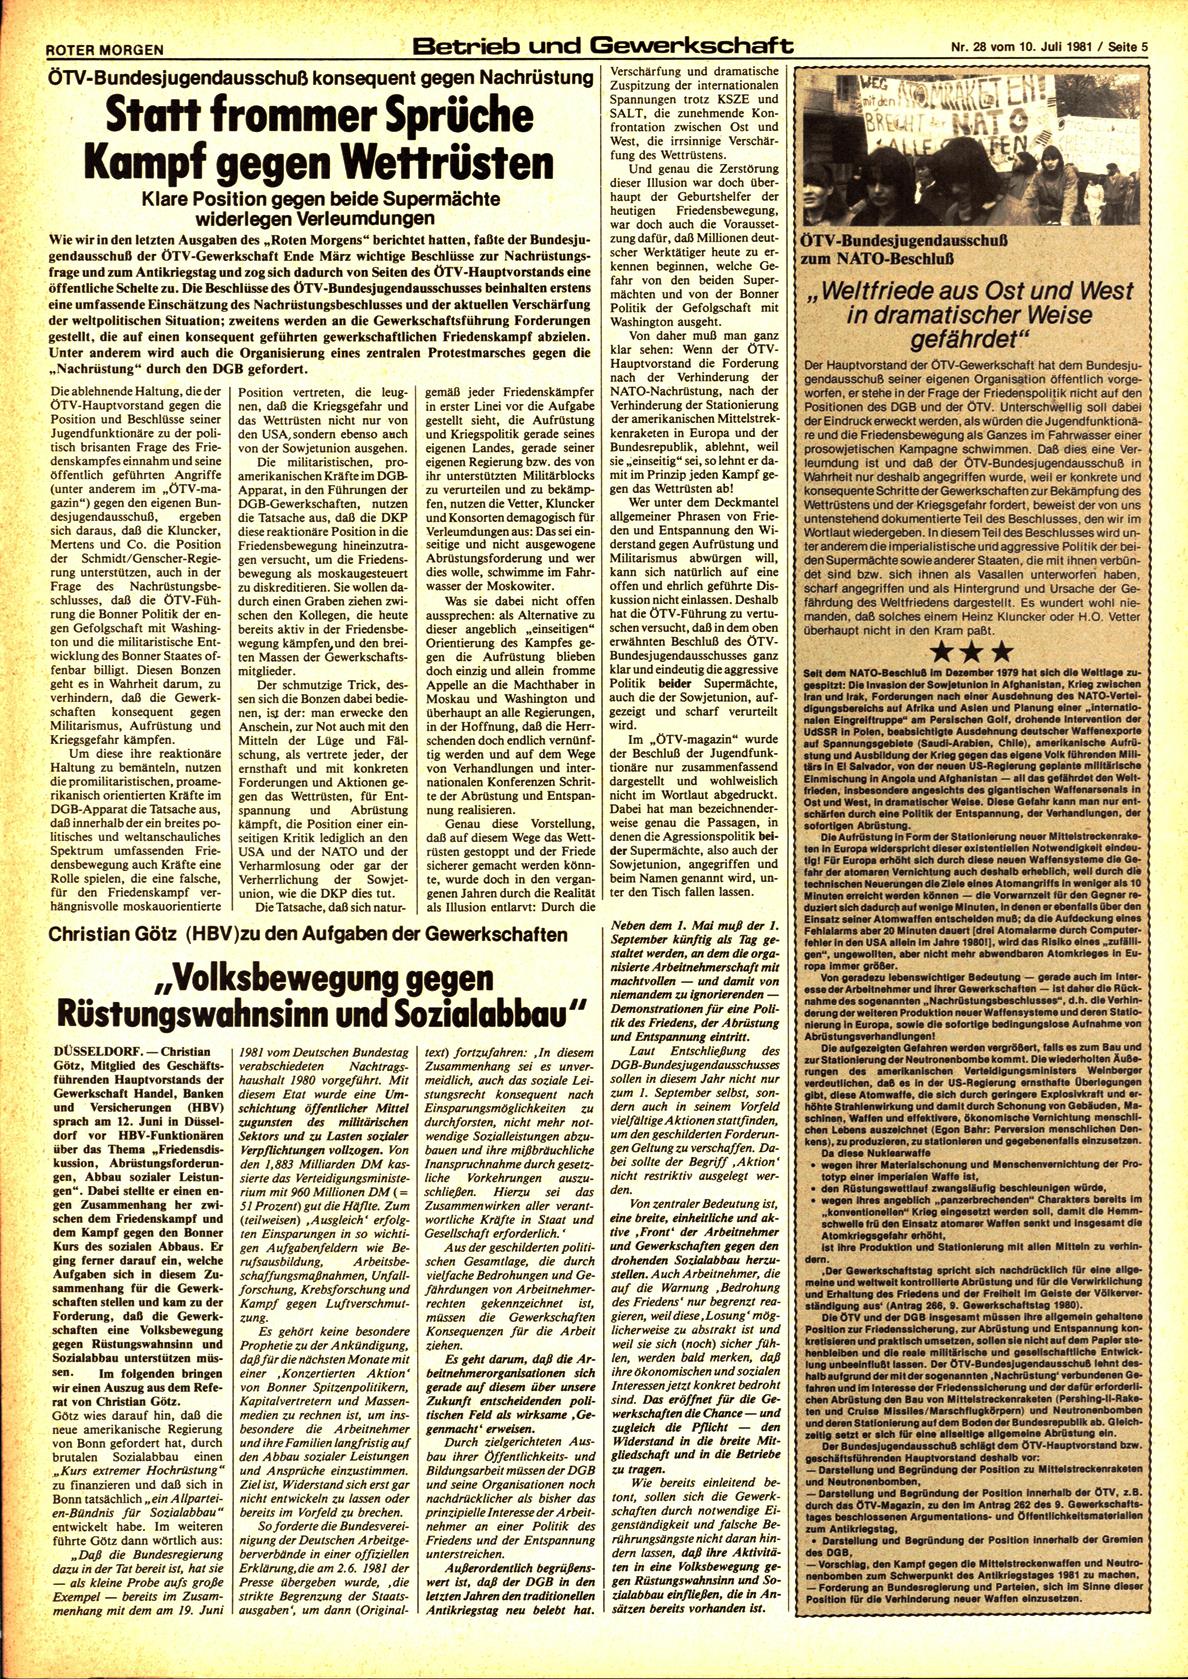 Roter Morgen, 15. Jg., 10. Juli 1981, Nr. 28, Seite 5